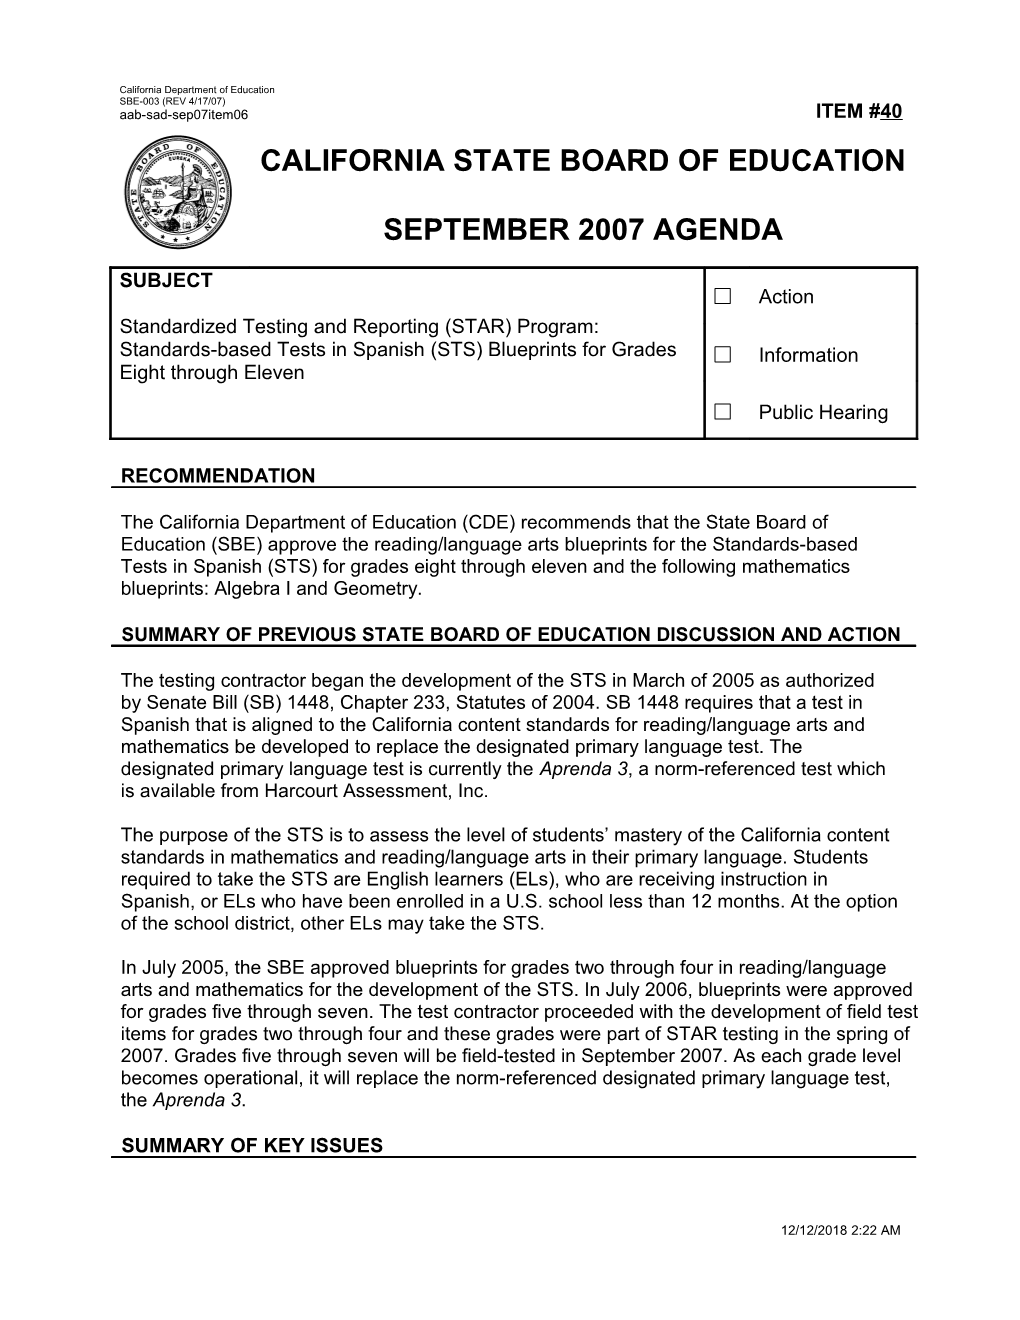 September 2007 Agenda Item 40 - Meeting Agendas (CA State Board of Education)